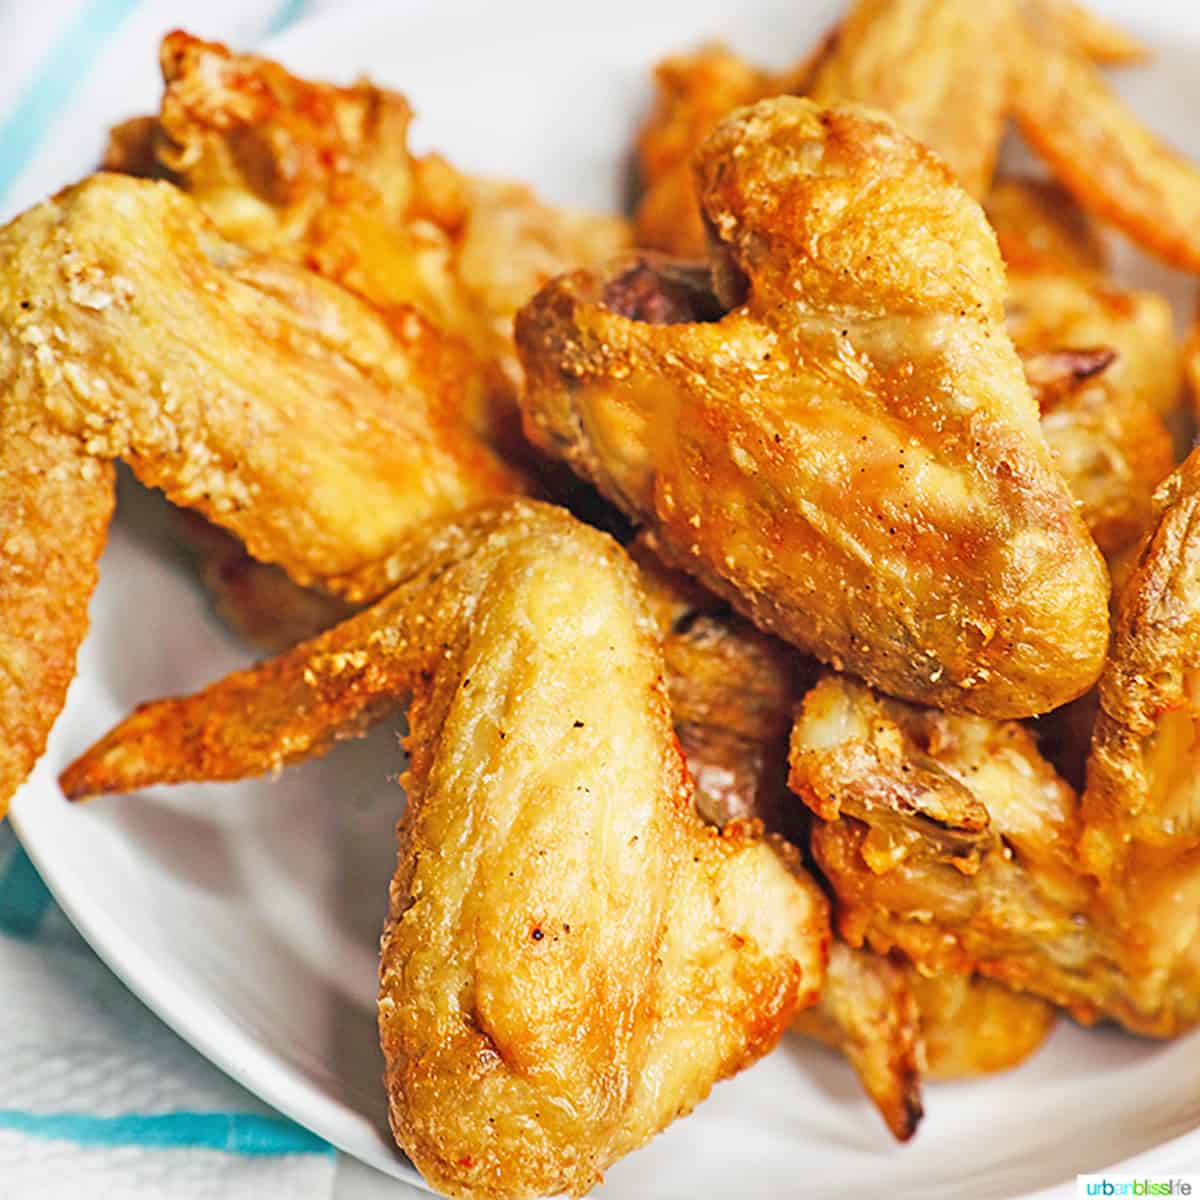 https://urbanblisslife.com/wp-content/uploads/2022/06/Crispy-Air-Fryer-Chicken-Wings-Recipe.jpg